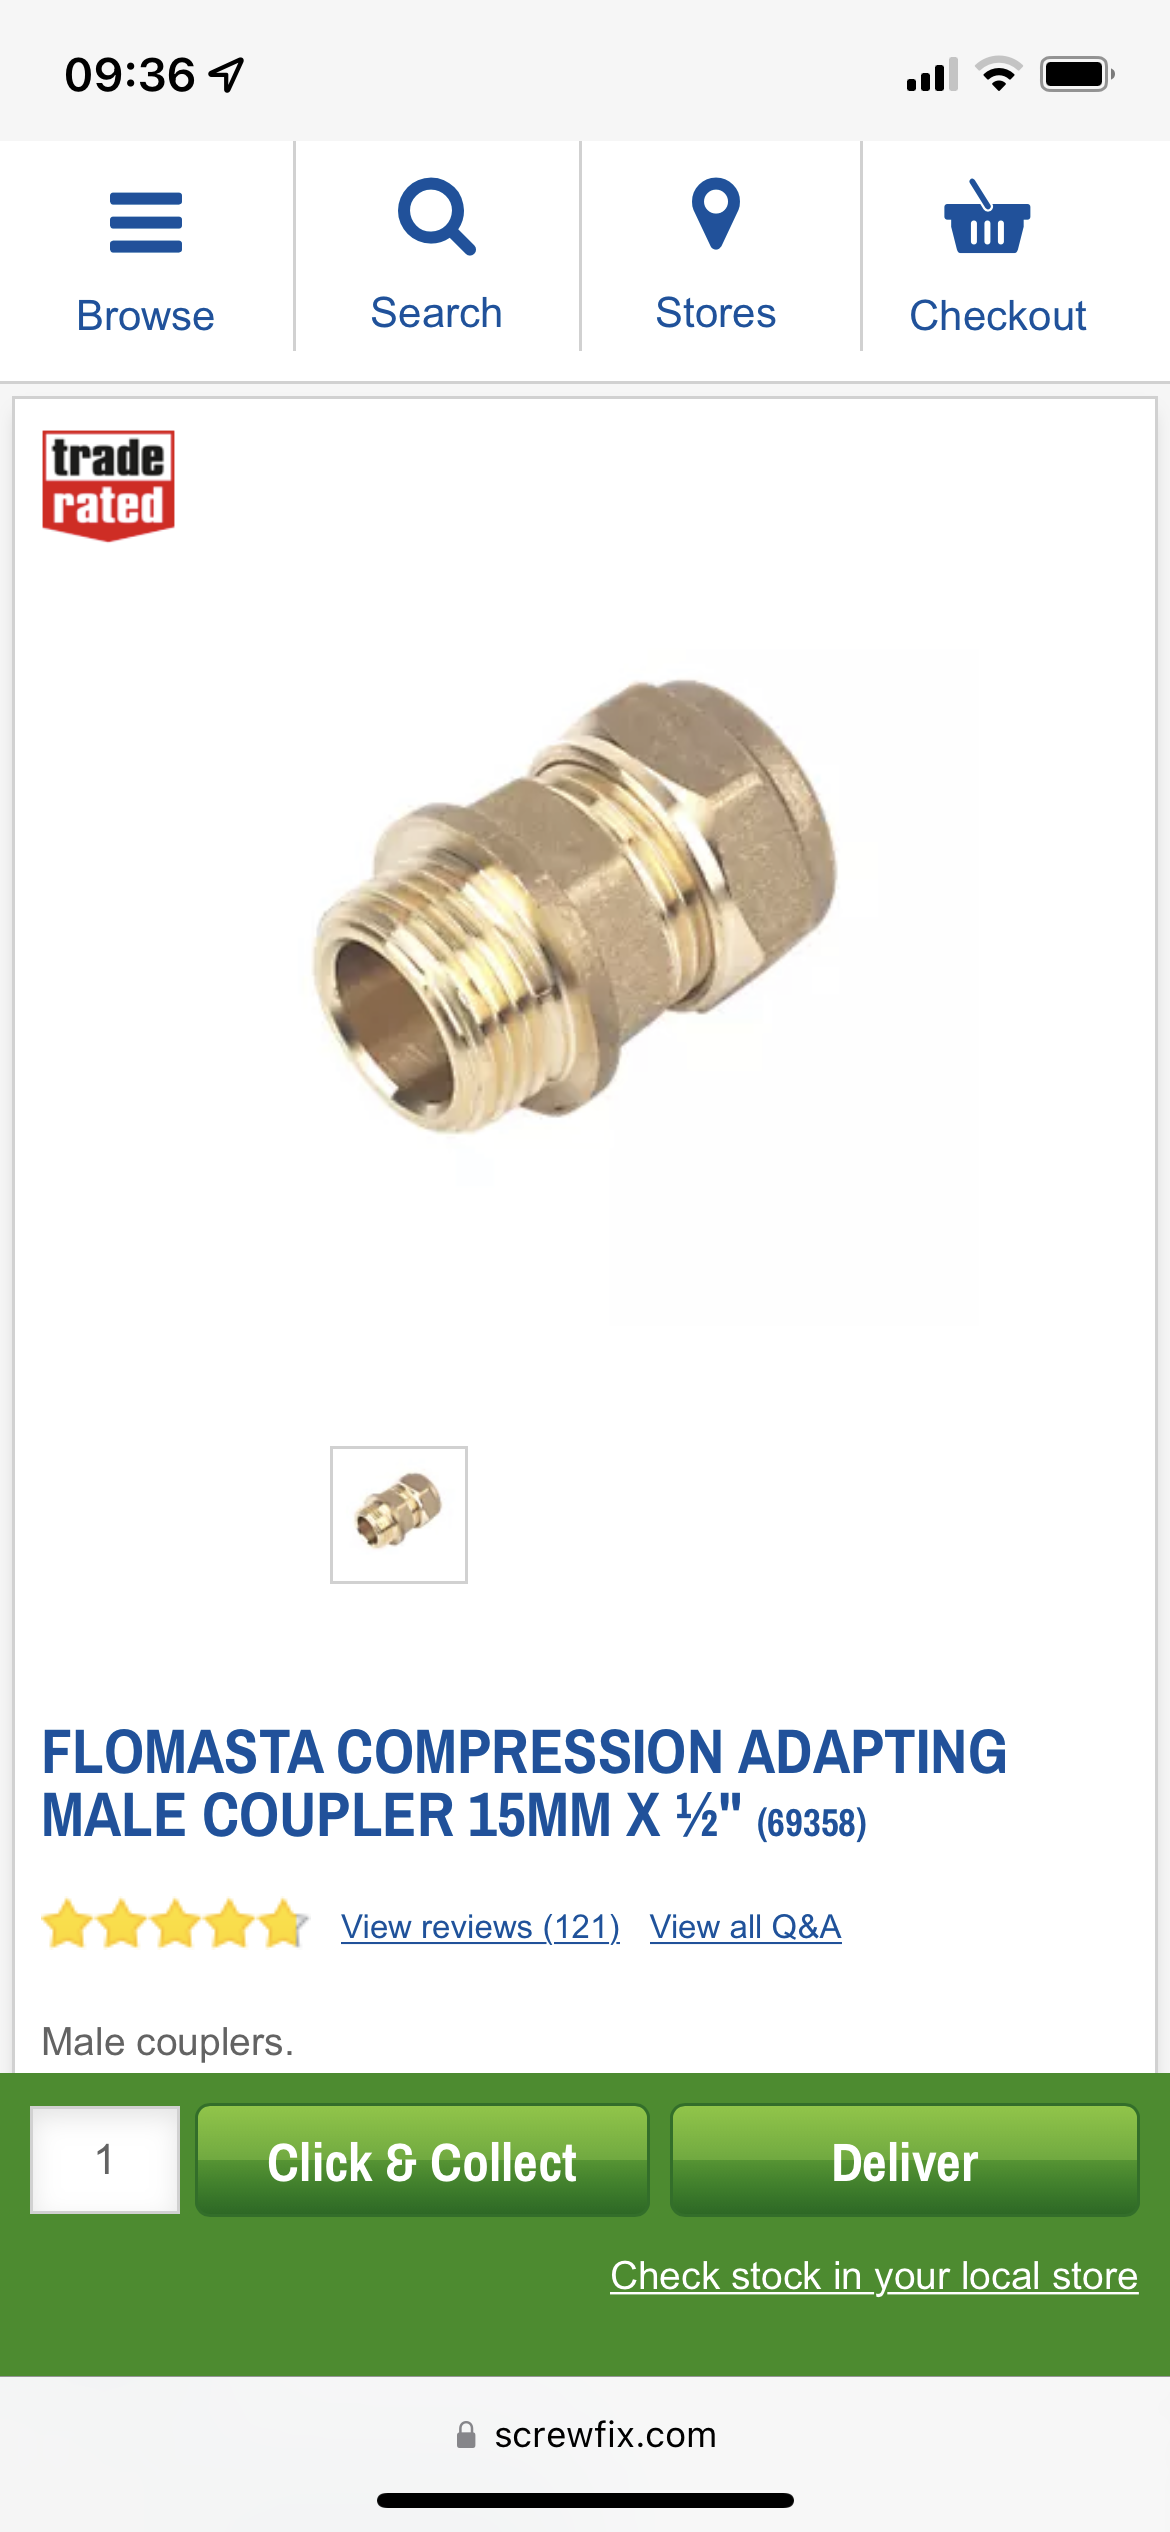 Flomasta Compression Adapting Female Coupler 15mm x 1/2 - Screwfix